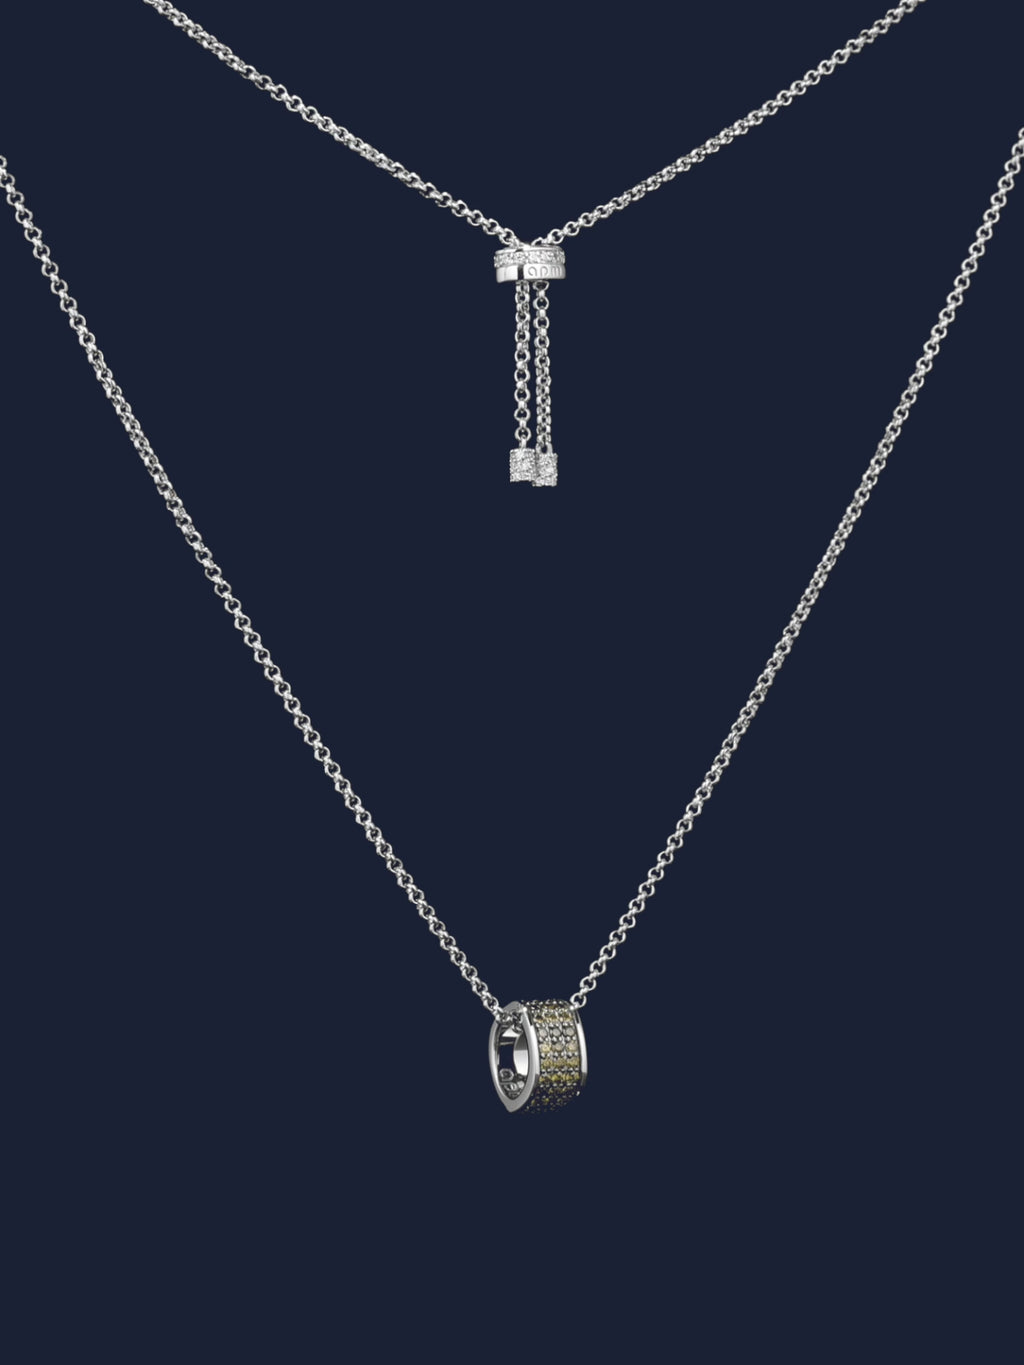 Adjustable Necklace with Khaki Ring Pendant - Silver | APM Monaco